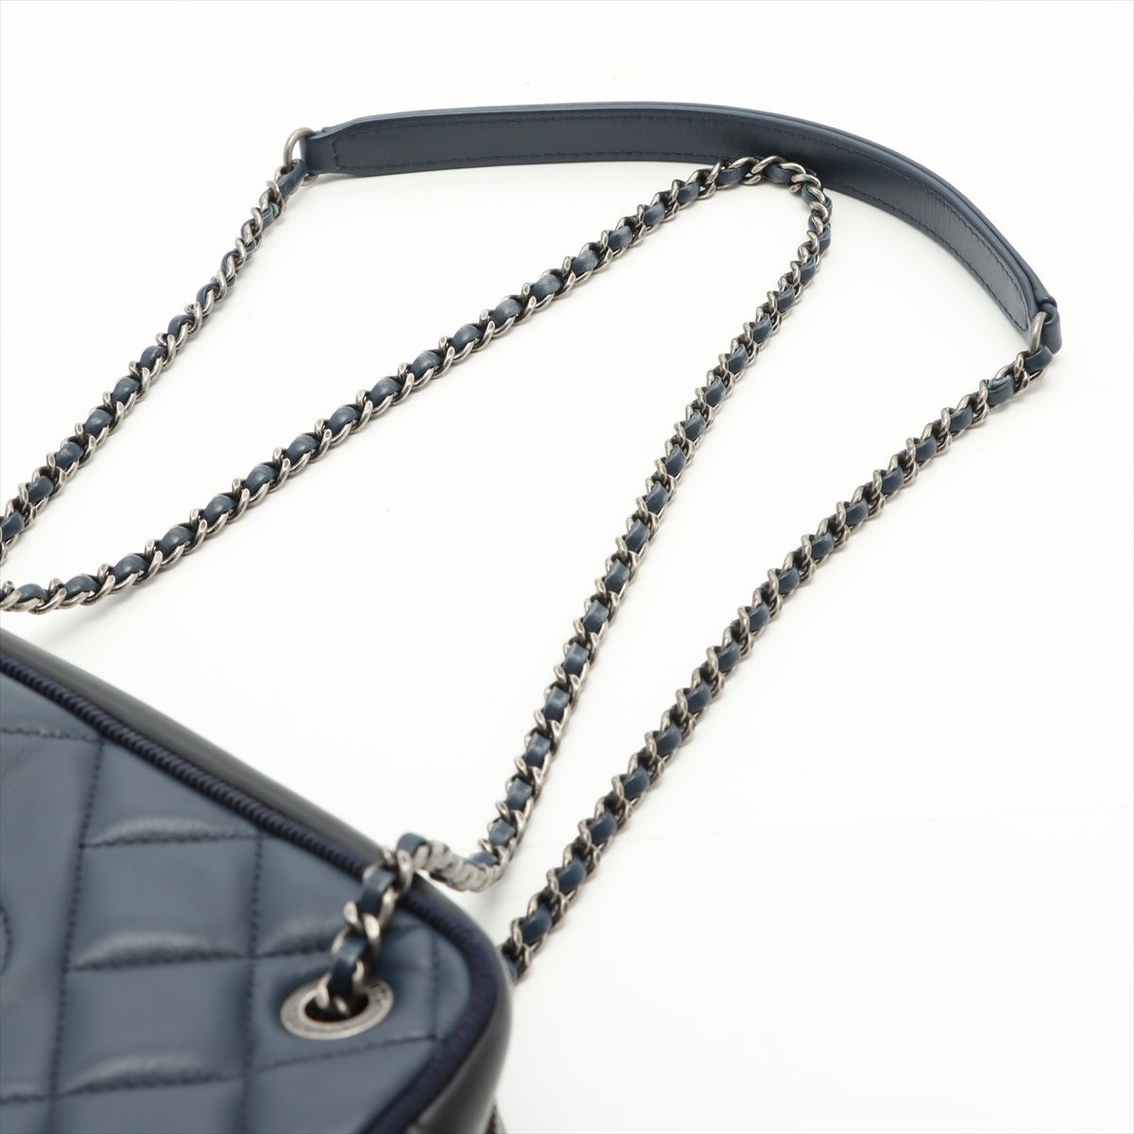 Chanel Black and Navy Matelasse Lambskin Shoulder Bag  (Pre-Owned) - Image 5 of 5